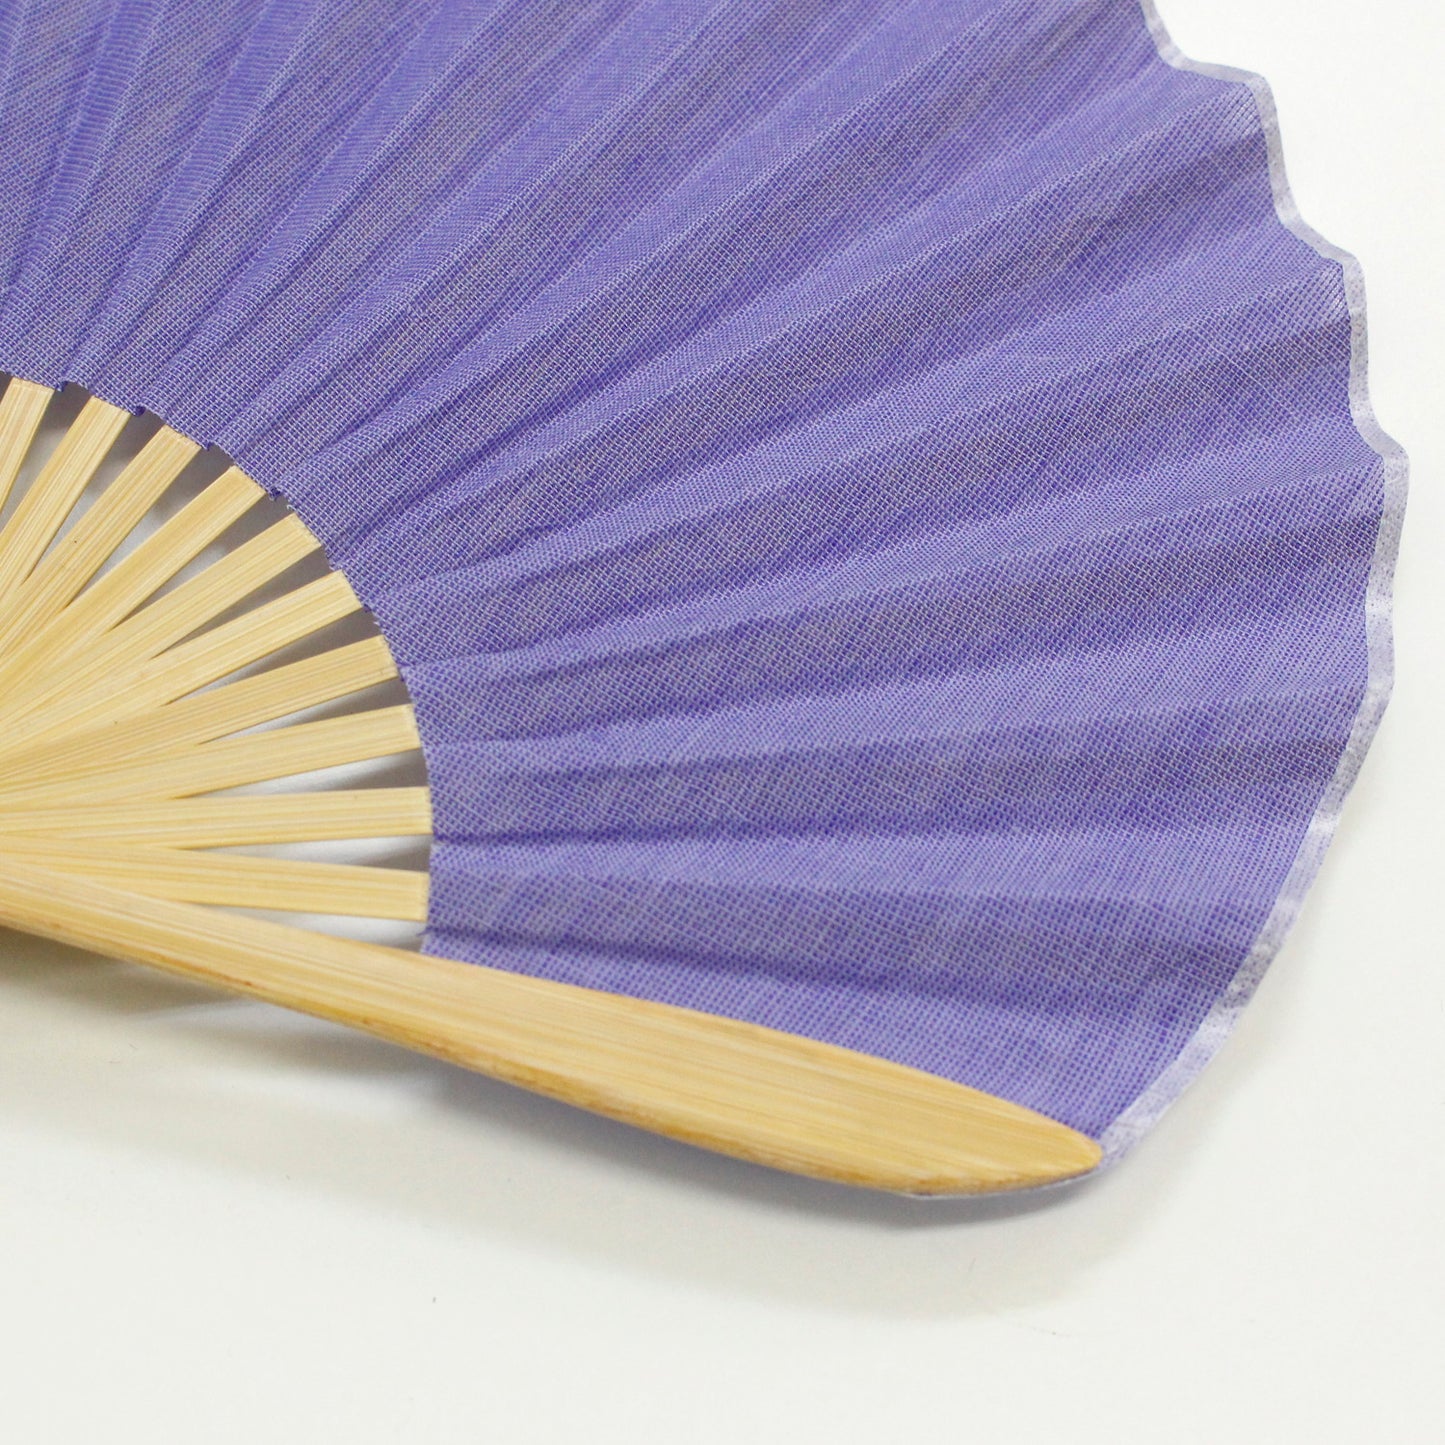 Shell-Shaped Folding Fan / Lavender / Plain